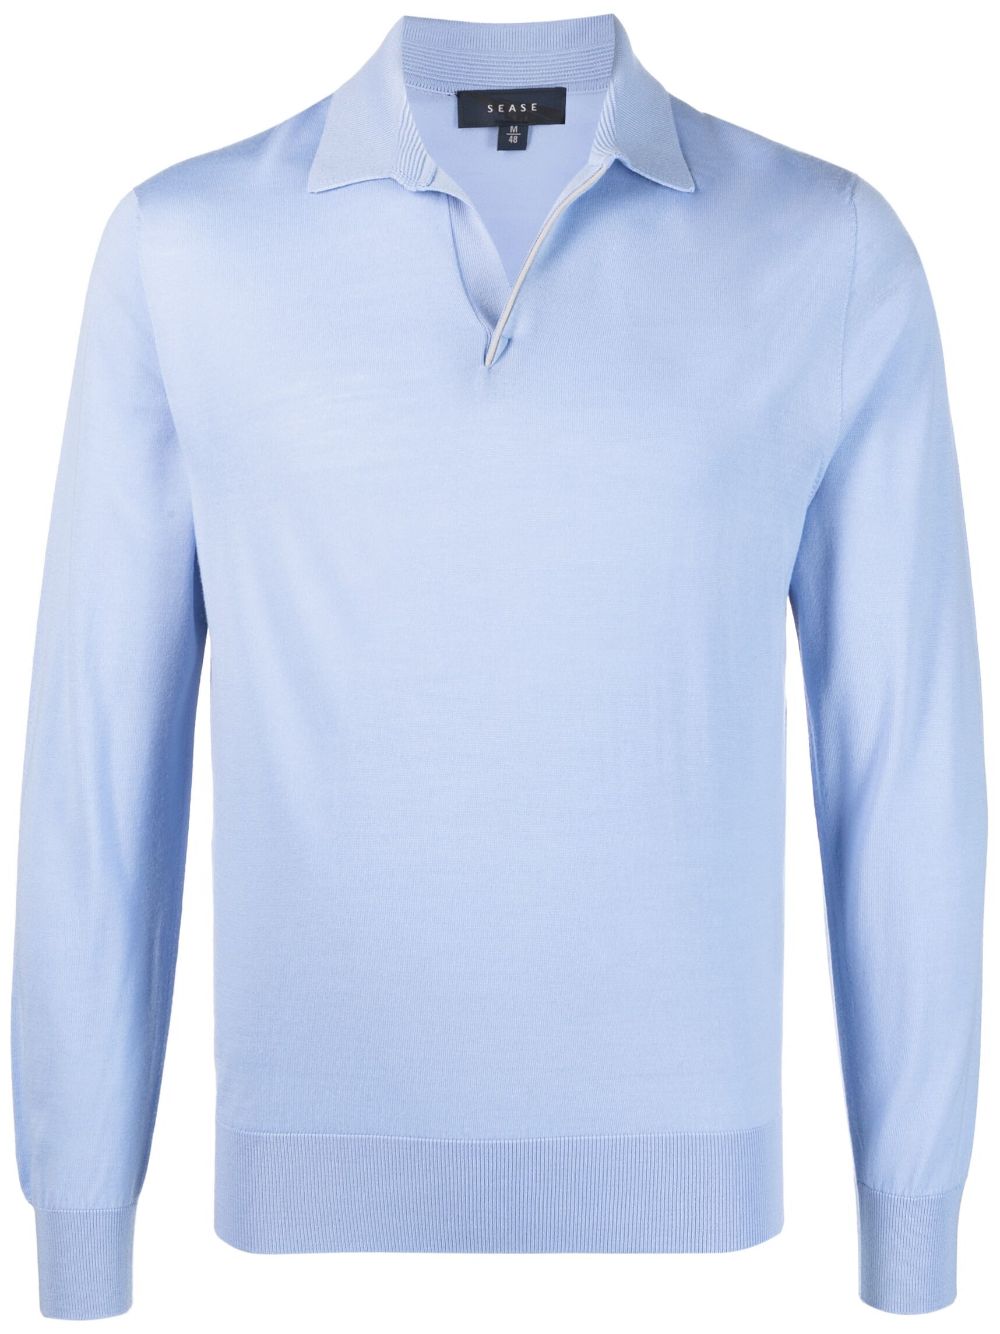 Sease fine-knit polo shirt - Blue